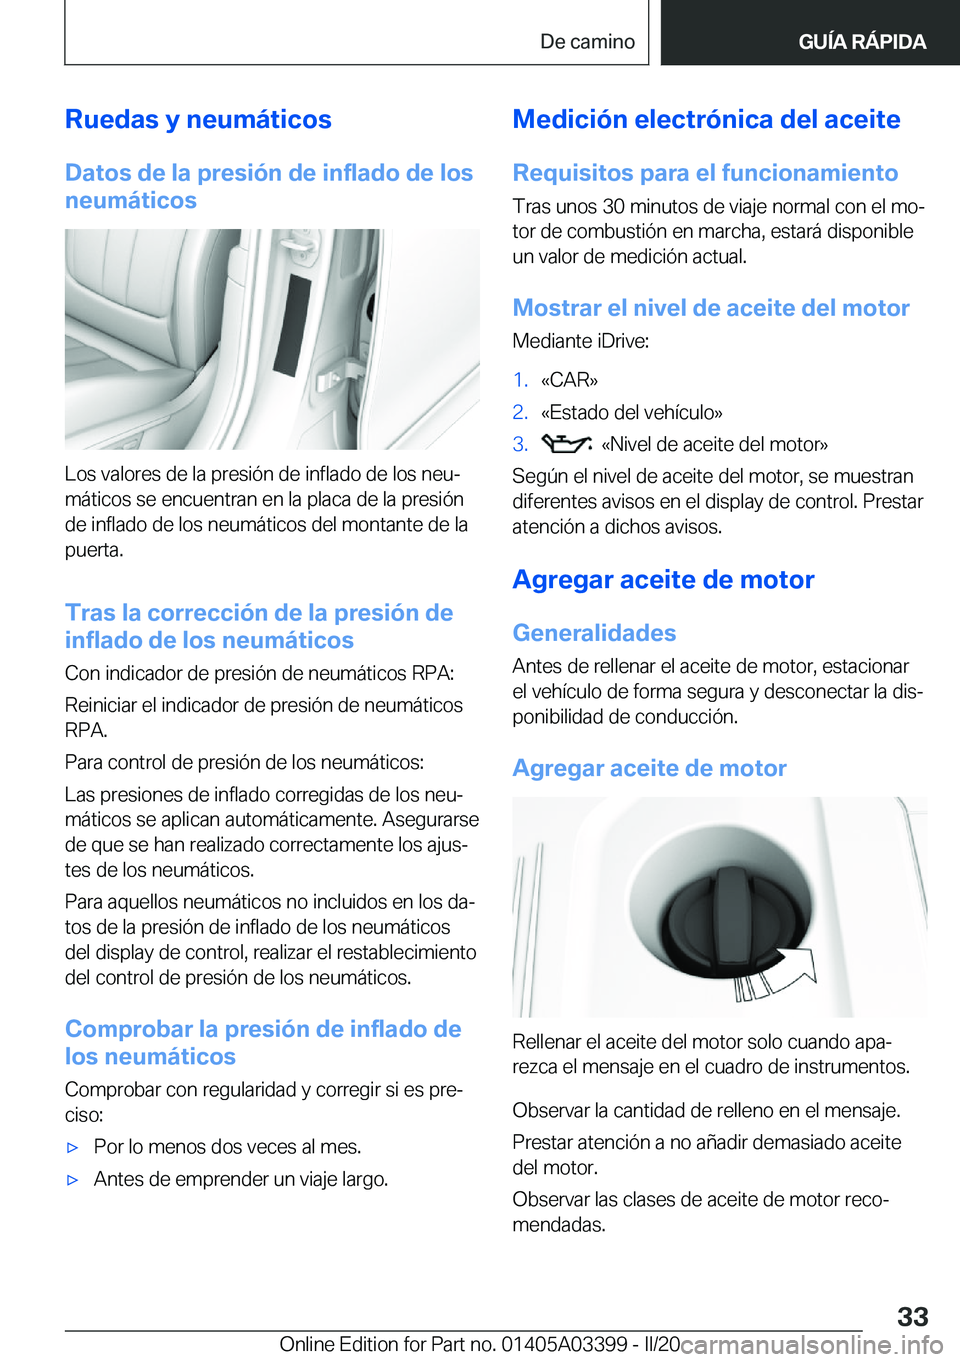 BMW M8 GRAN COUPE 2020  Manuales de Empleo (in Spanish) �R�u�e�d�a�s��y��n�e�u�m�